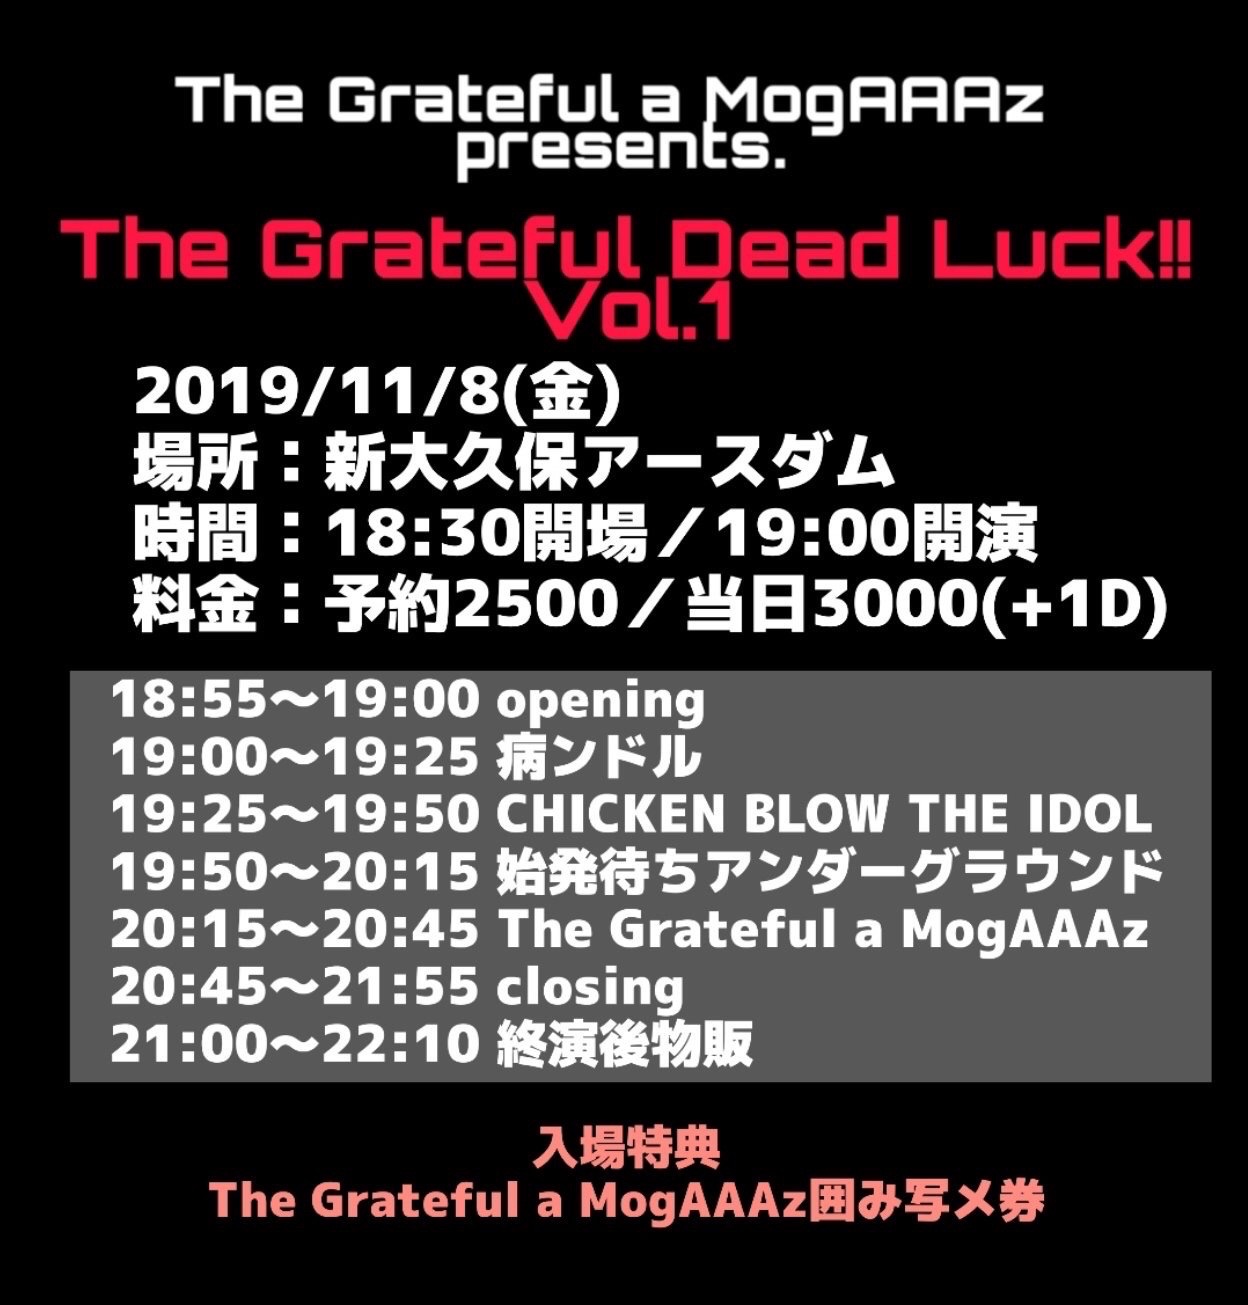 The Grateful Dead Luck!! Vol.1 メインイメージ